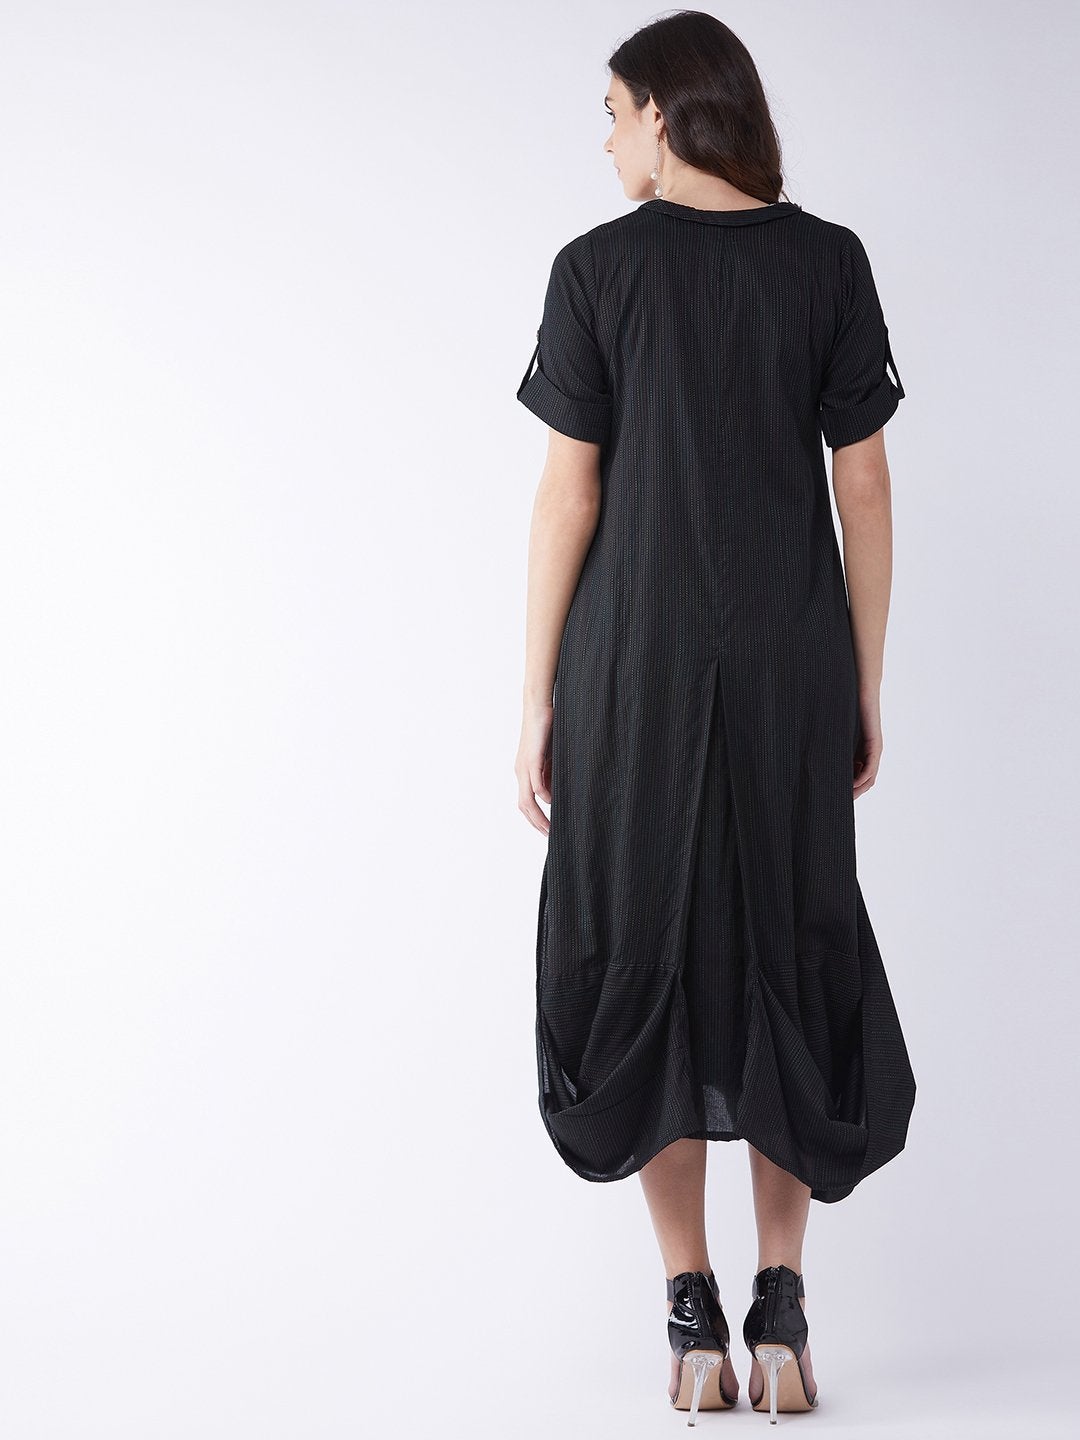 Women's Black Kantha Cowl Dress - InWeave